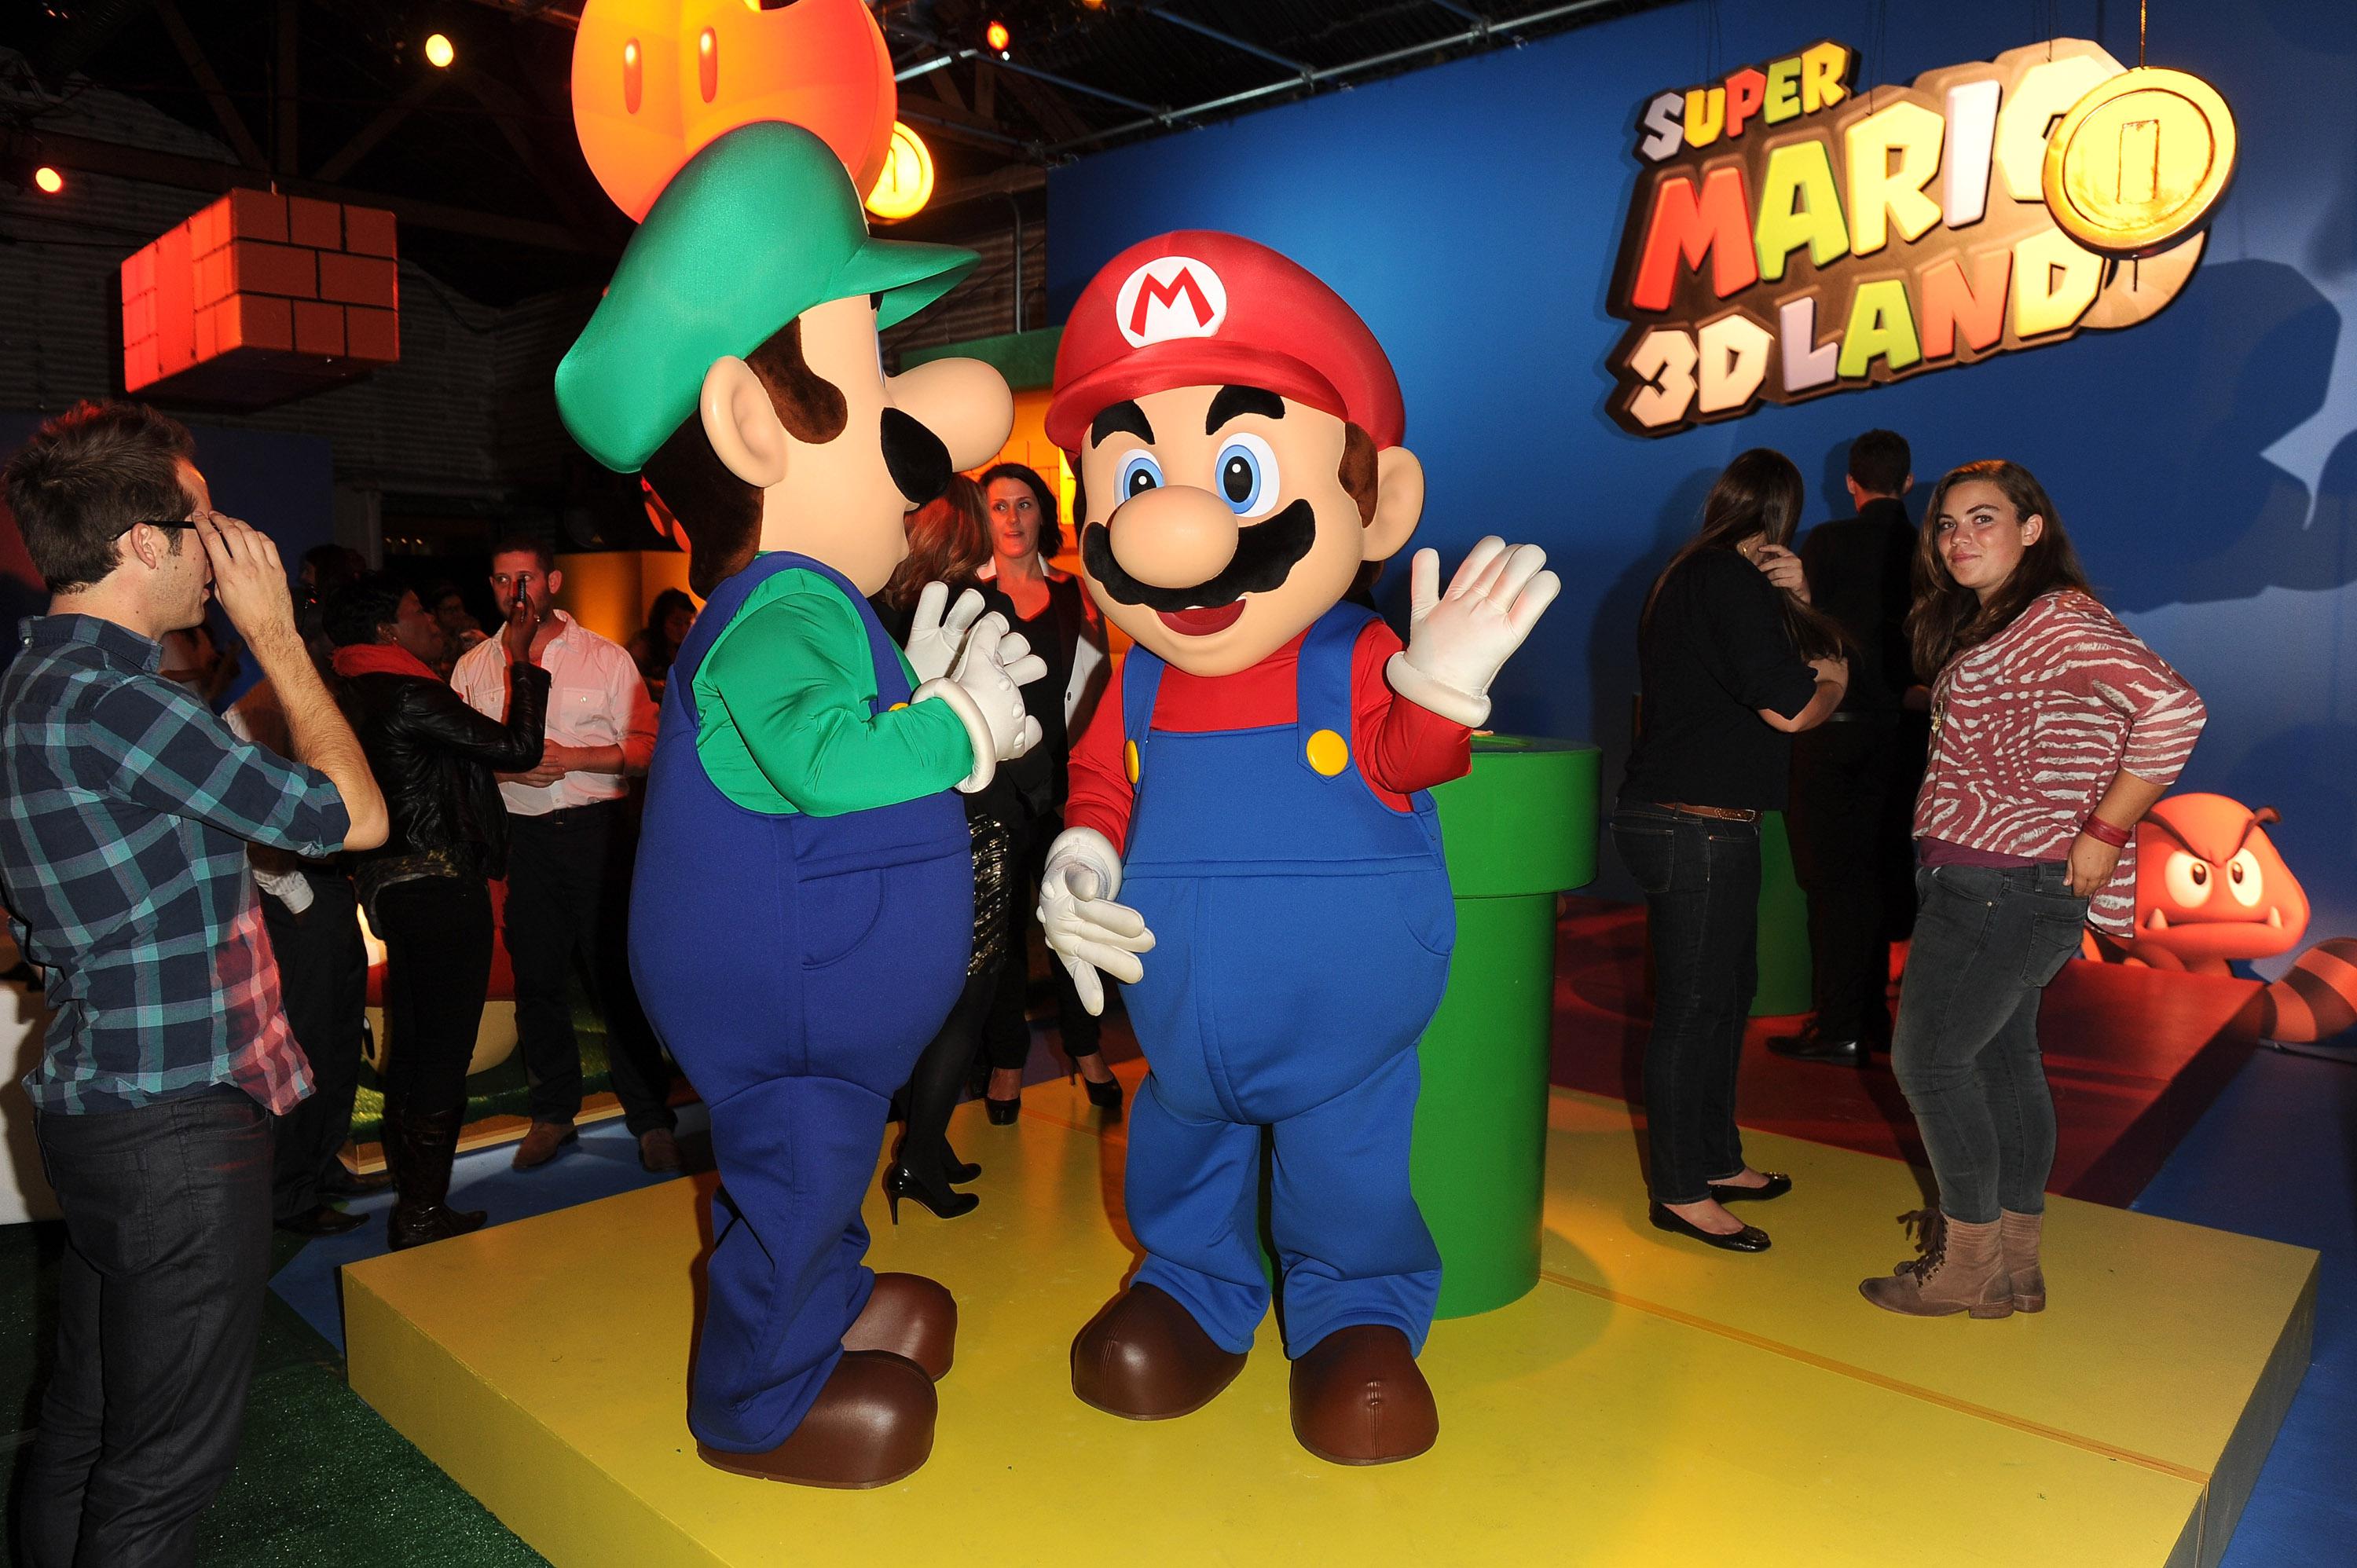 Mario and Luigi: foreign oligarchs in the Mushroom Kingdom